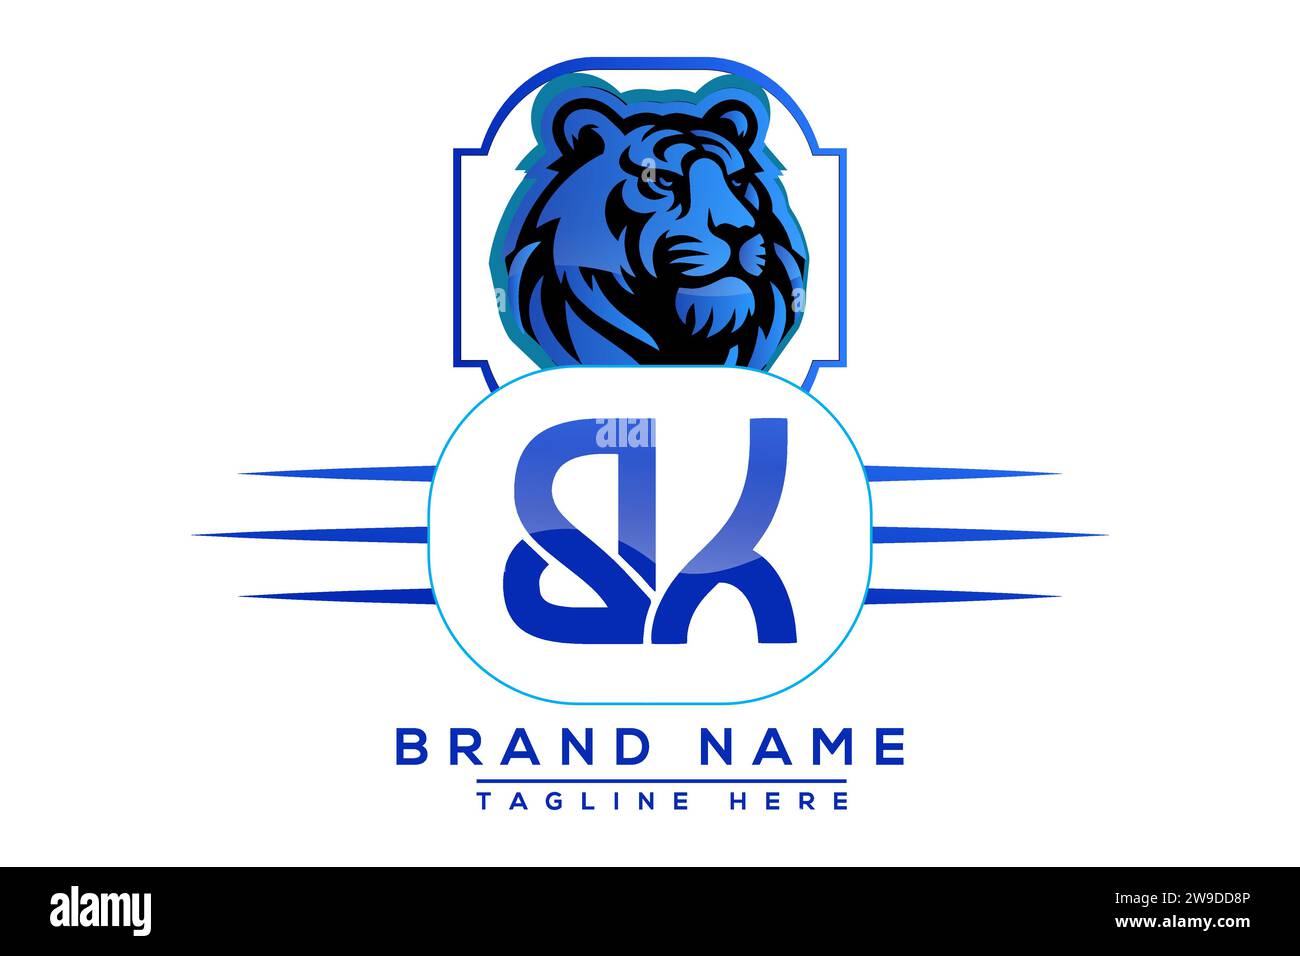 BK Tiger logo Blue Design. Vector logo design for business. Stock Vector